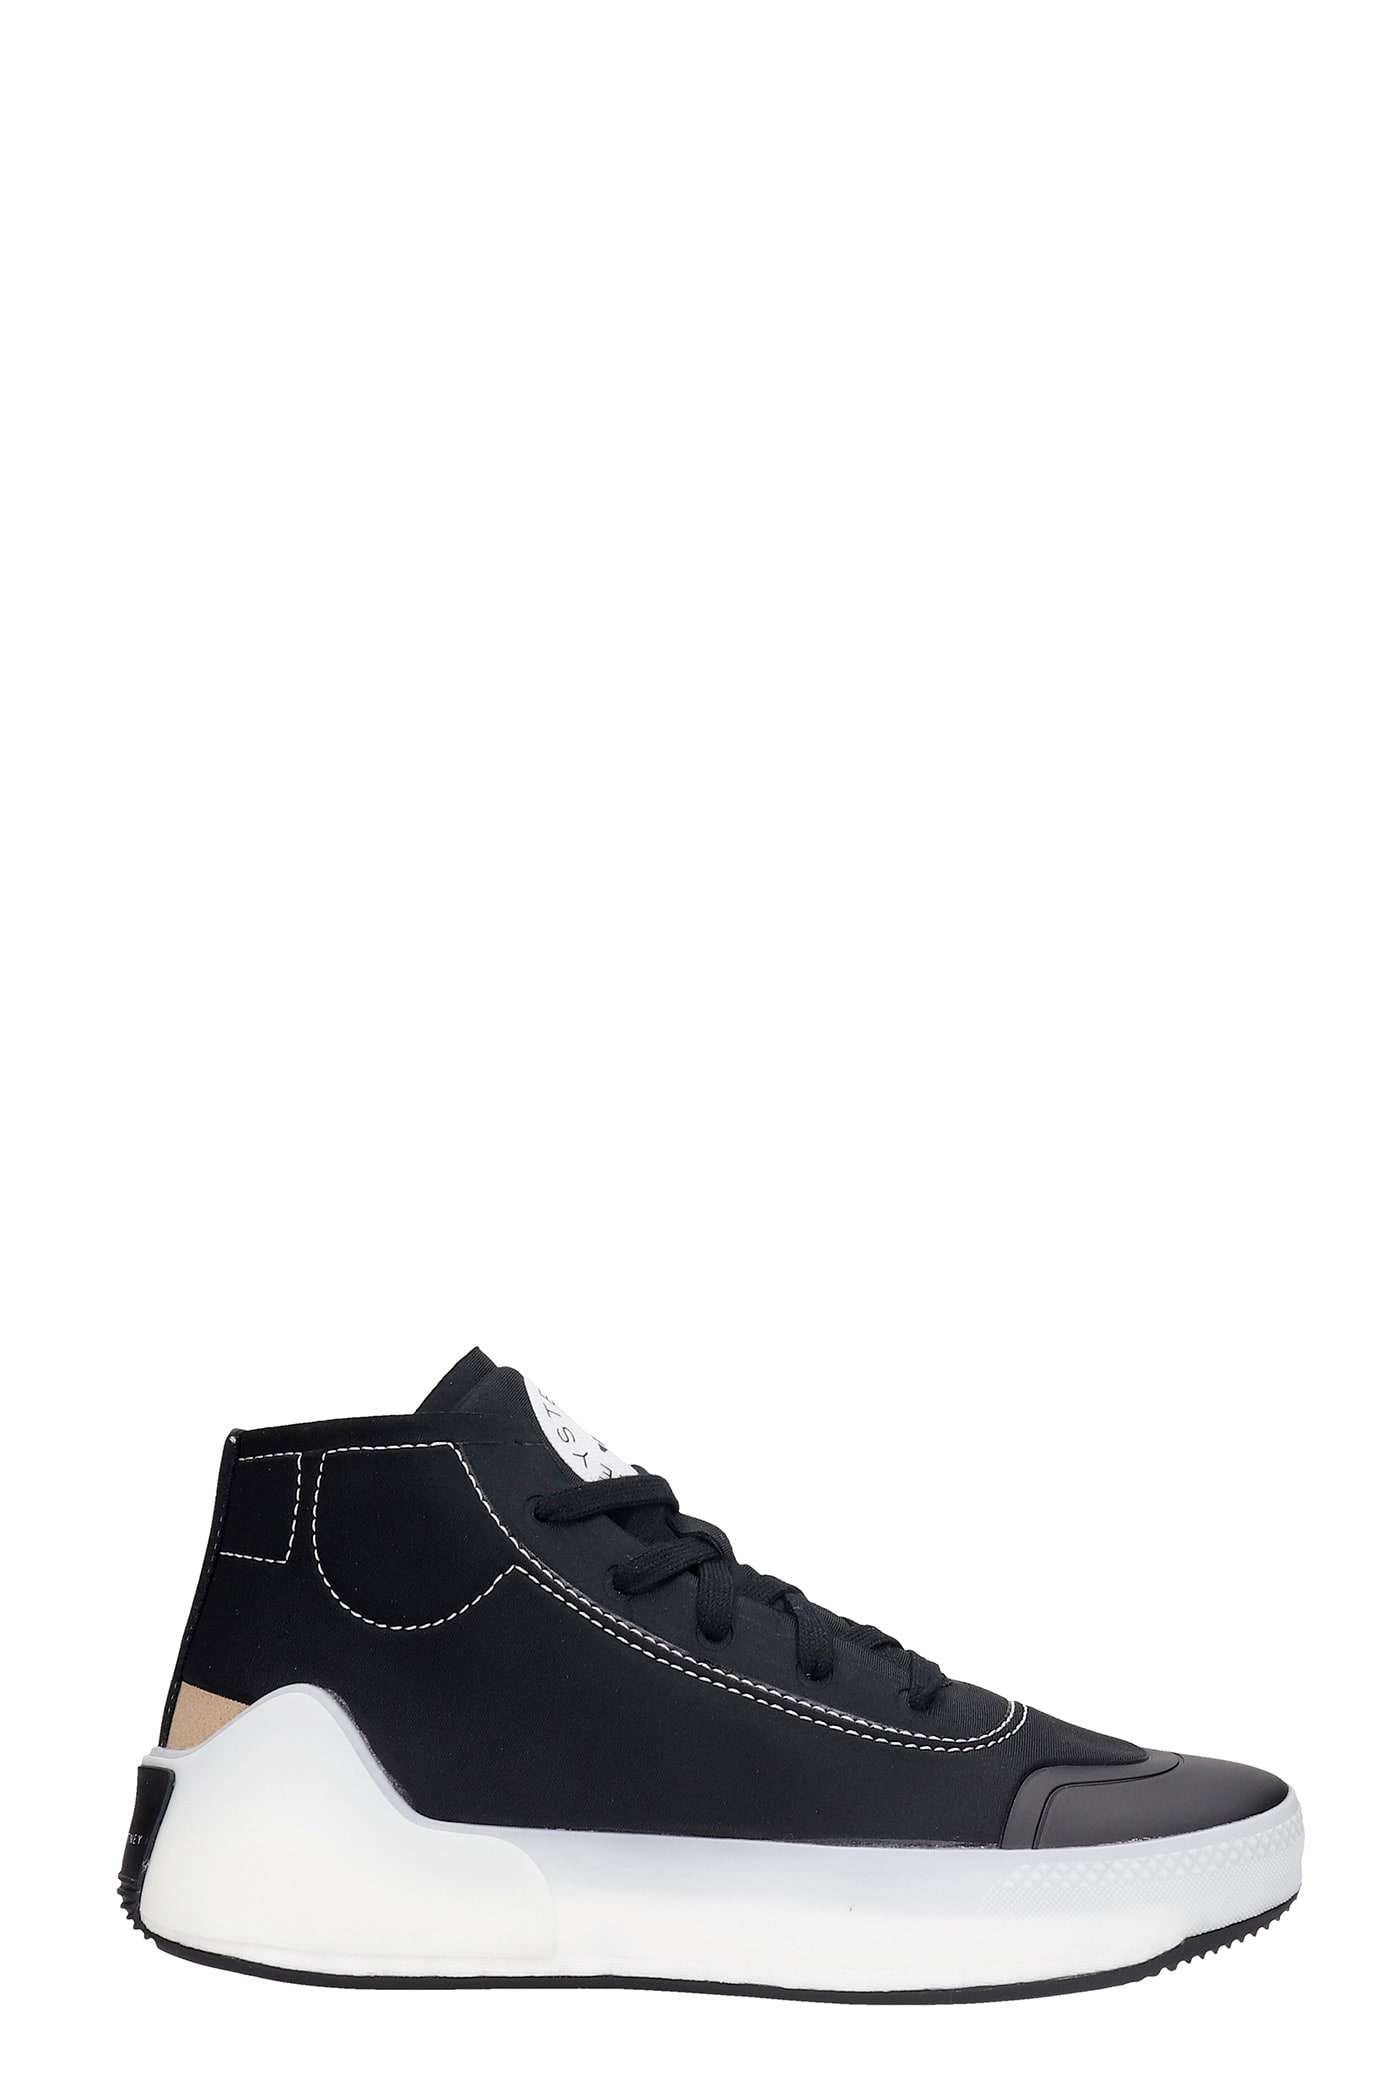 Adidas by Stella McCartney Asmc Treino Md Sneakers In Black Synthetic Fibers